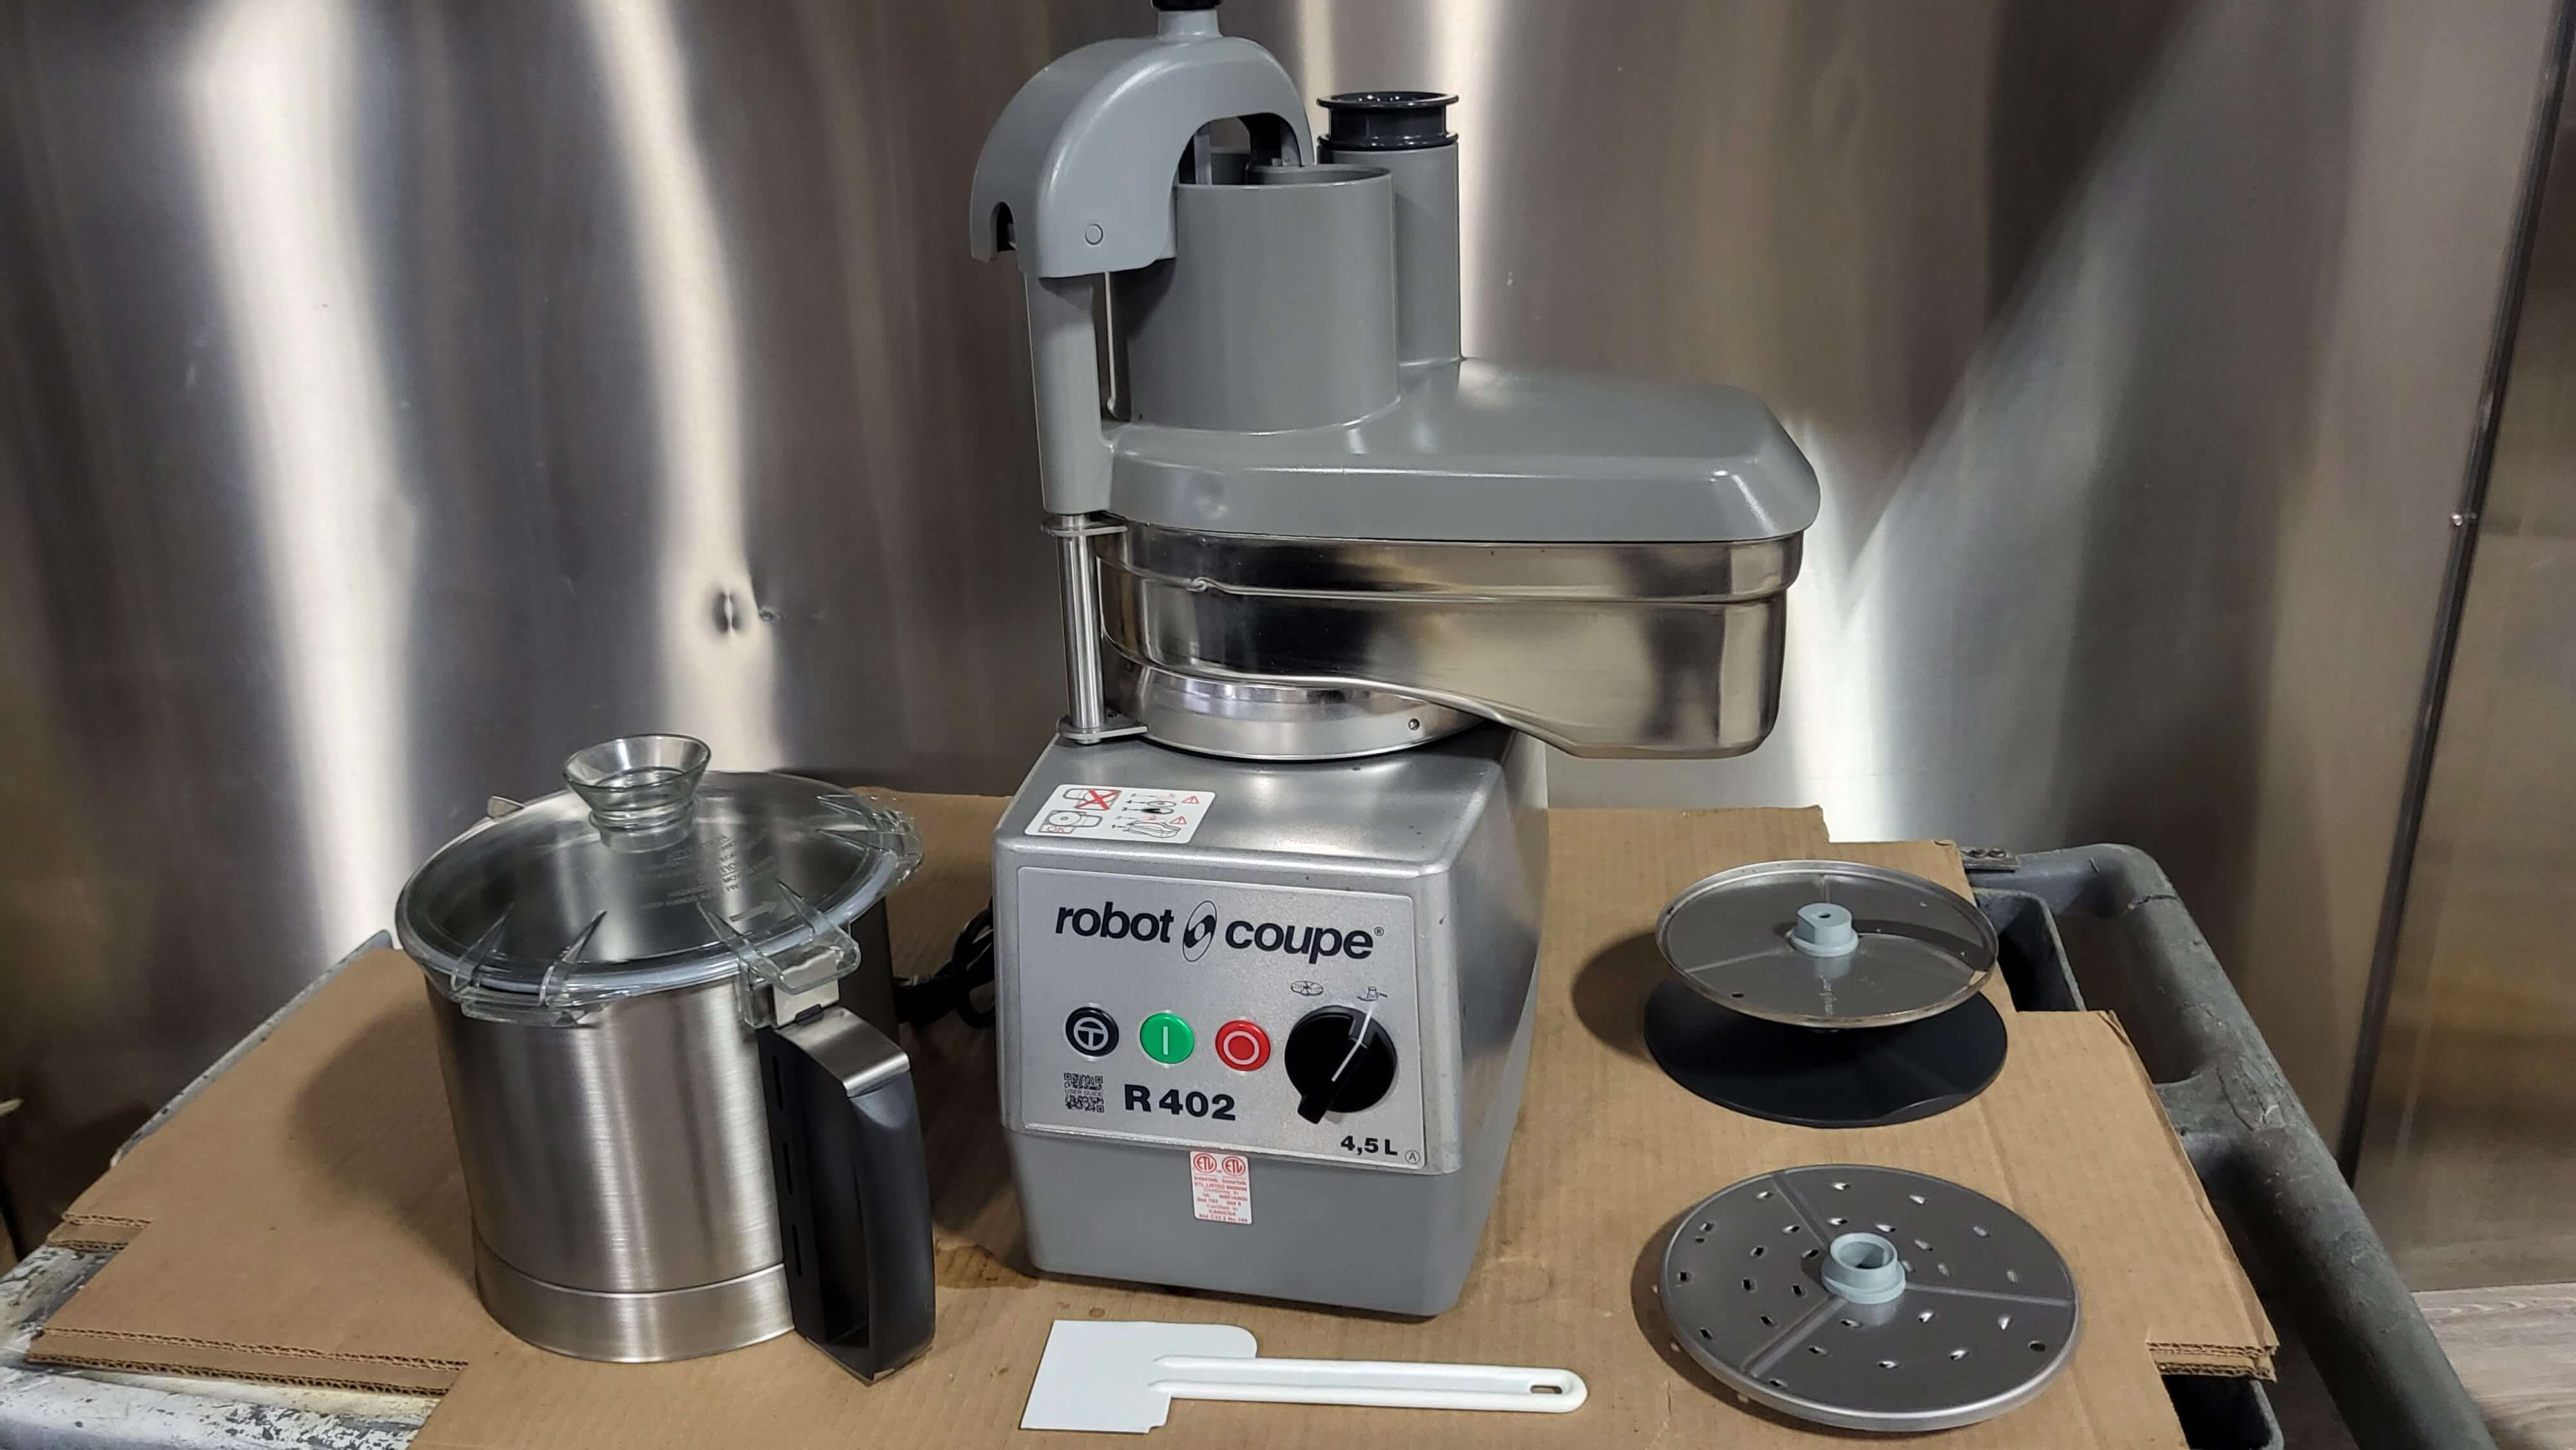 Thumbnail - Robot Coupe R402 Food Processor